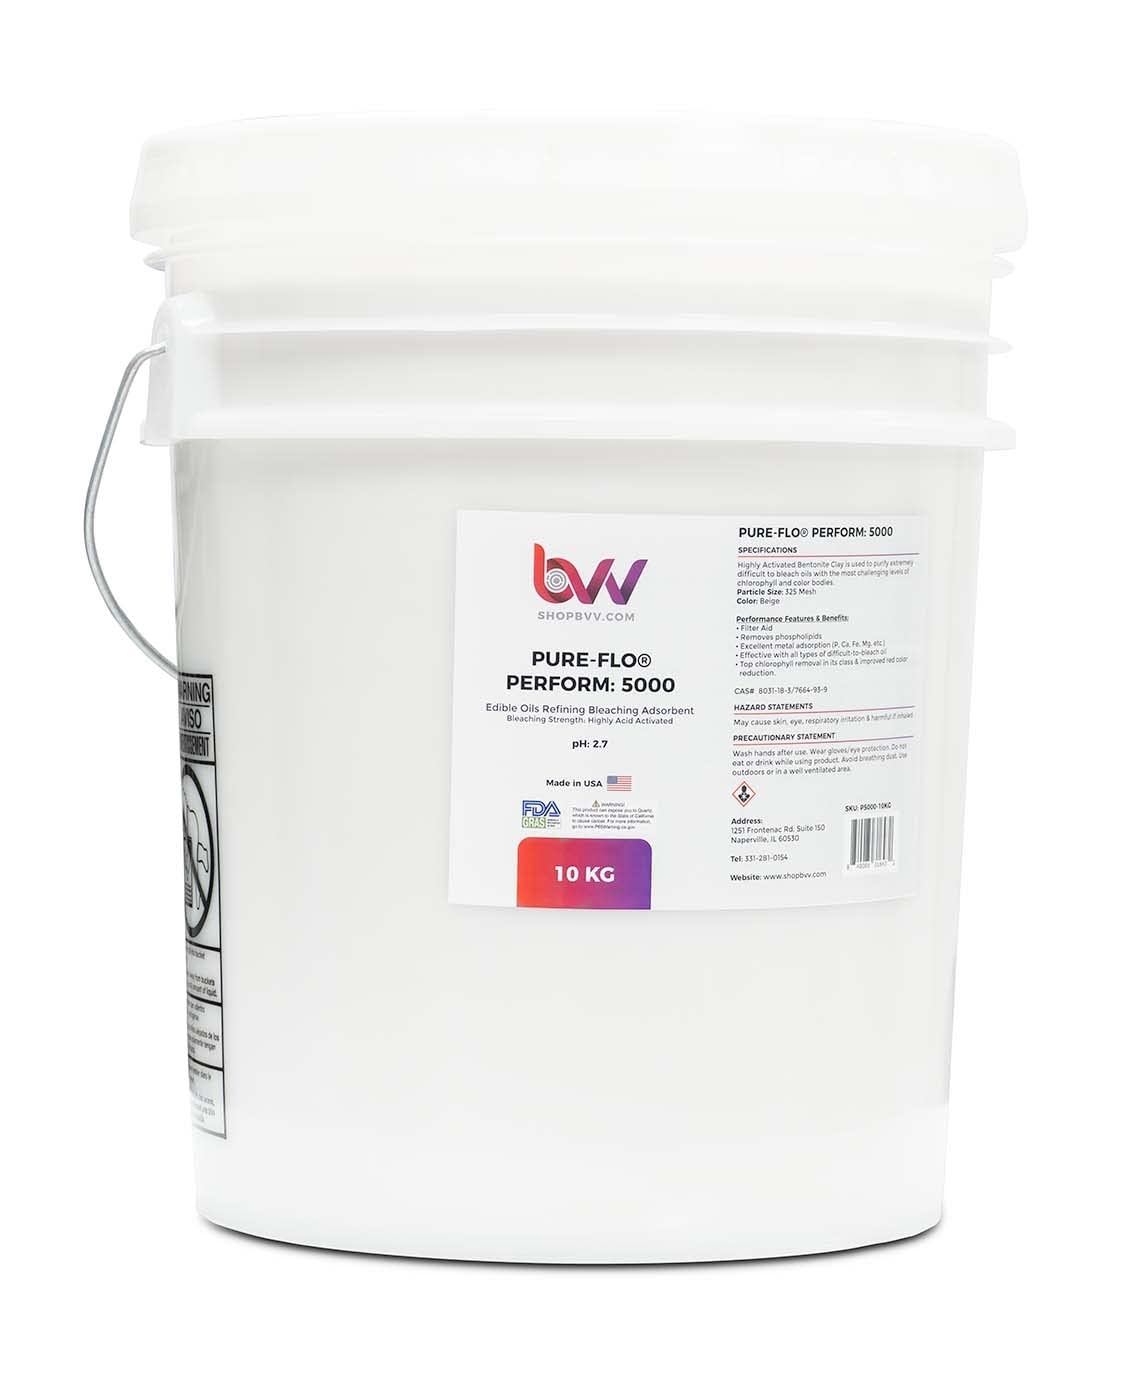 BVV Pure-Flo® Perform 5000 Highly Acid Activated Bleaching & Decolorizing Bentonite for Edible Oils *FDA-GRAS Size 10KG